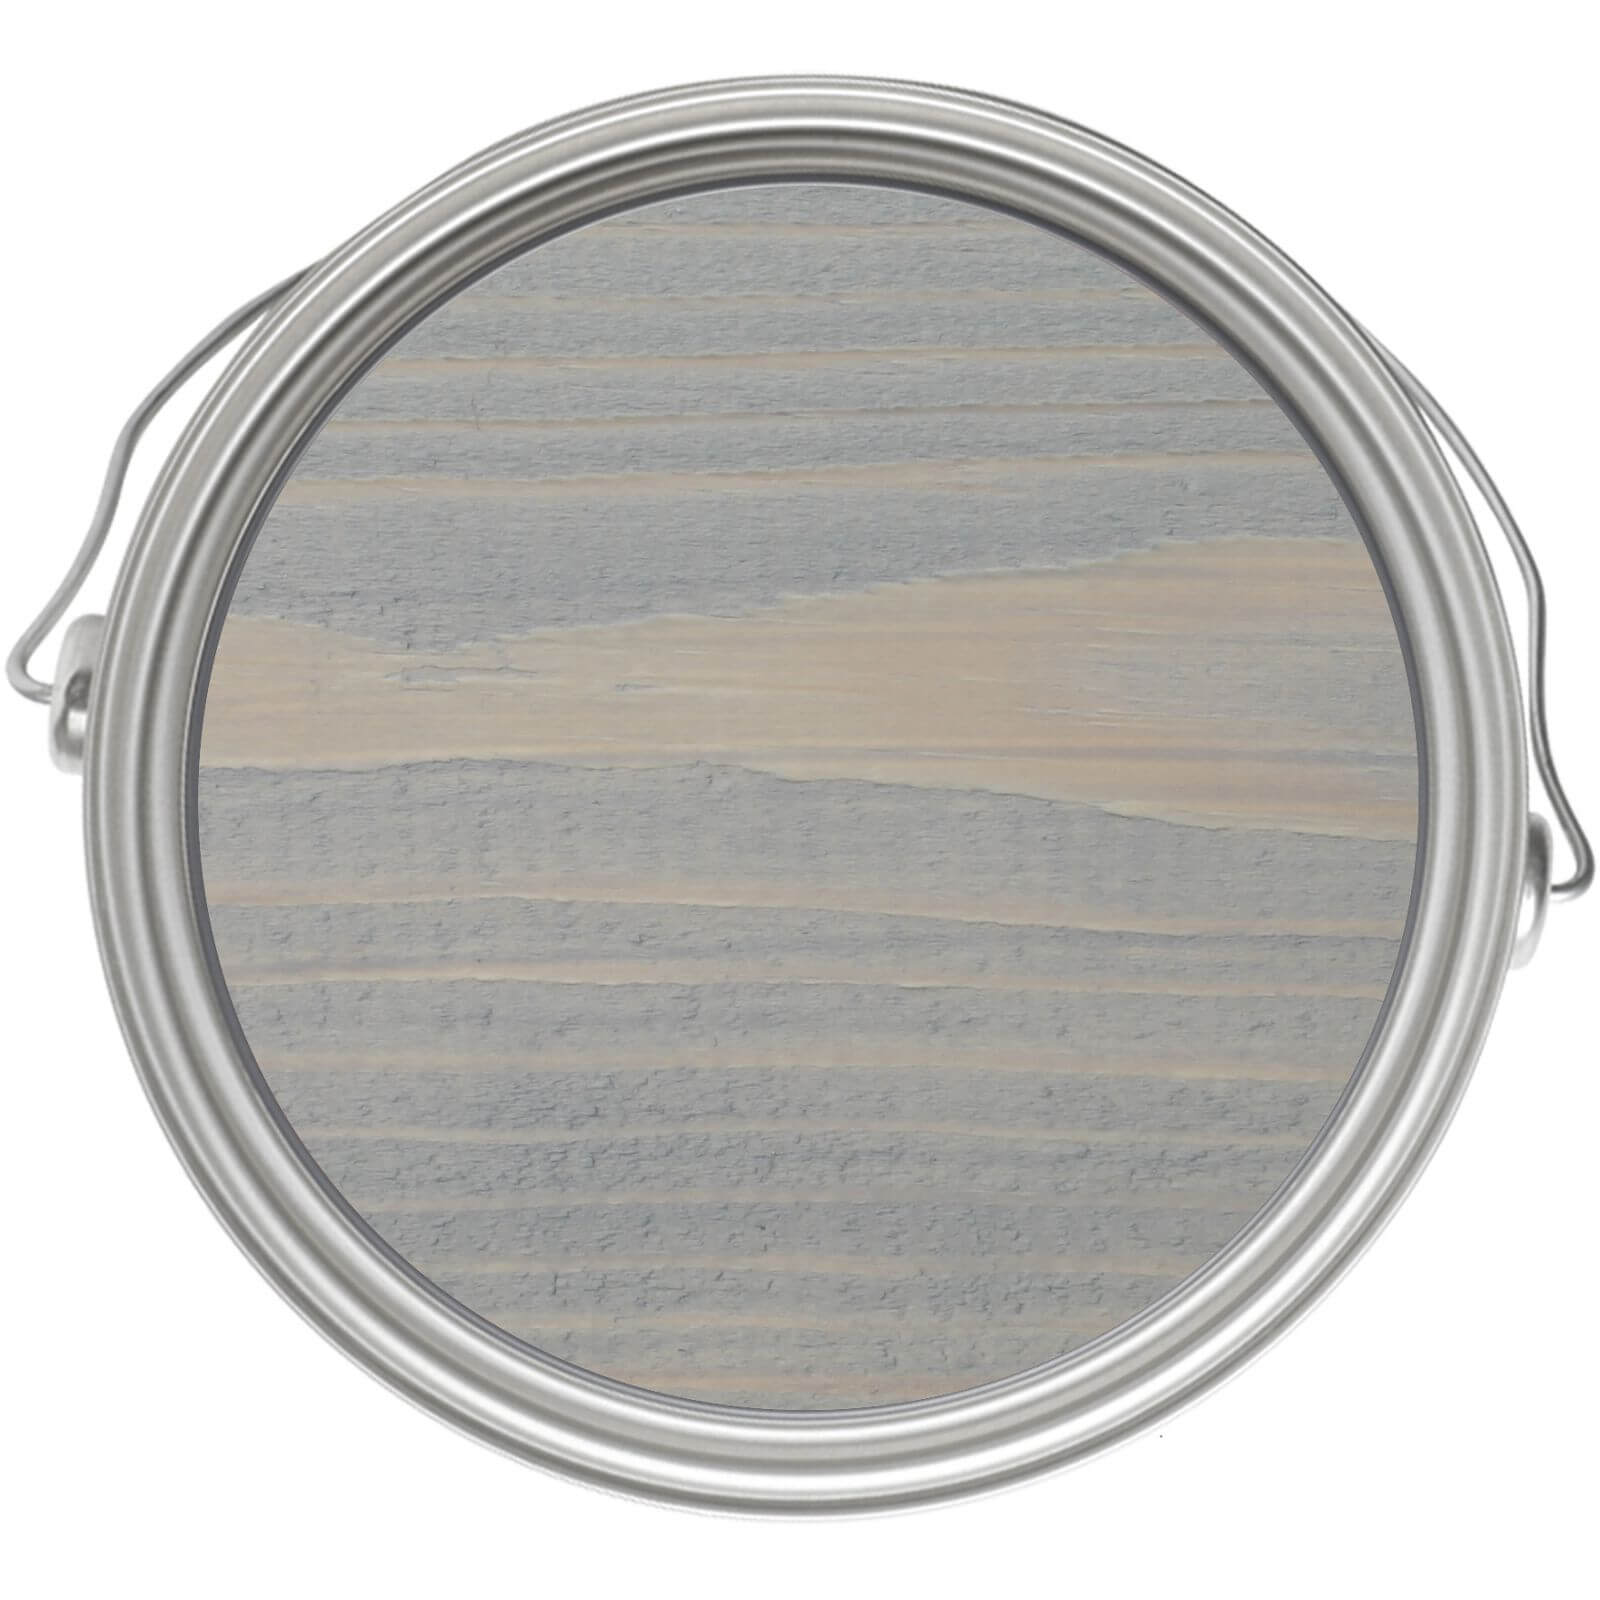 Photo of Rust-oleum Weathered Wood Paint - Ash Grey - 750ml